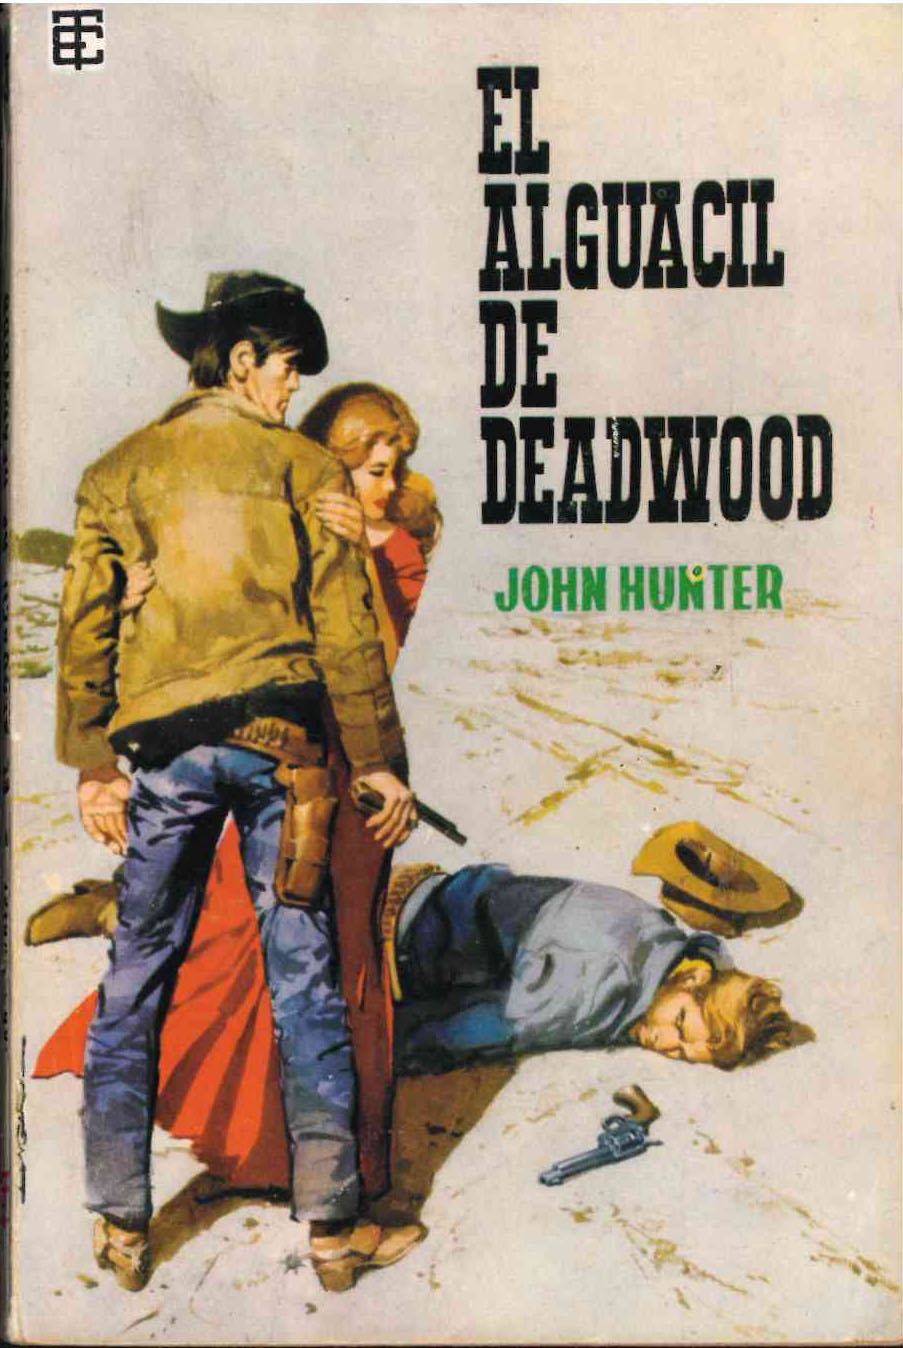 Toray Oeste nº 3. El alguacil de Deadwood por John Hunter. Toray 1960